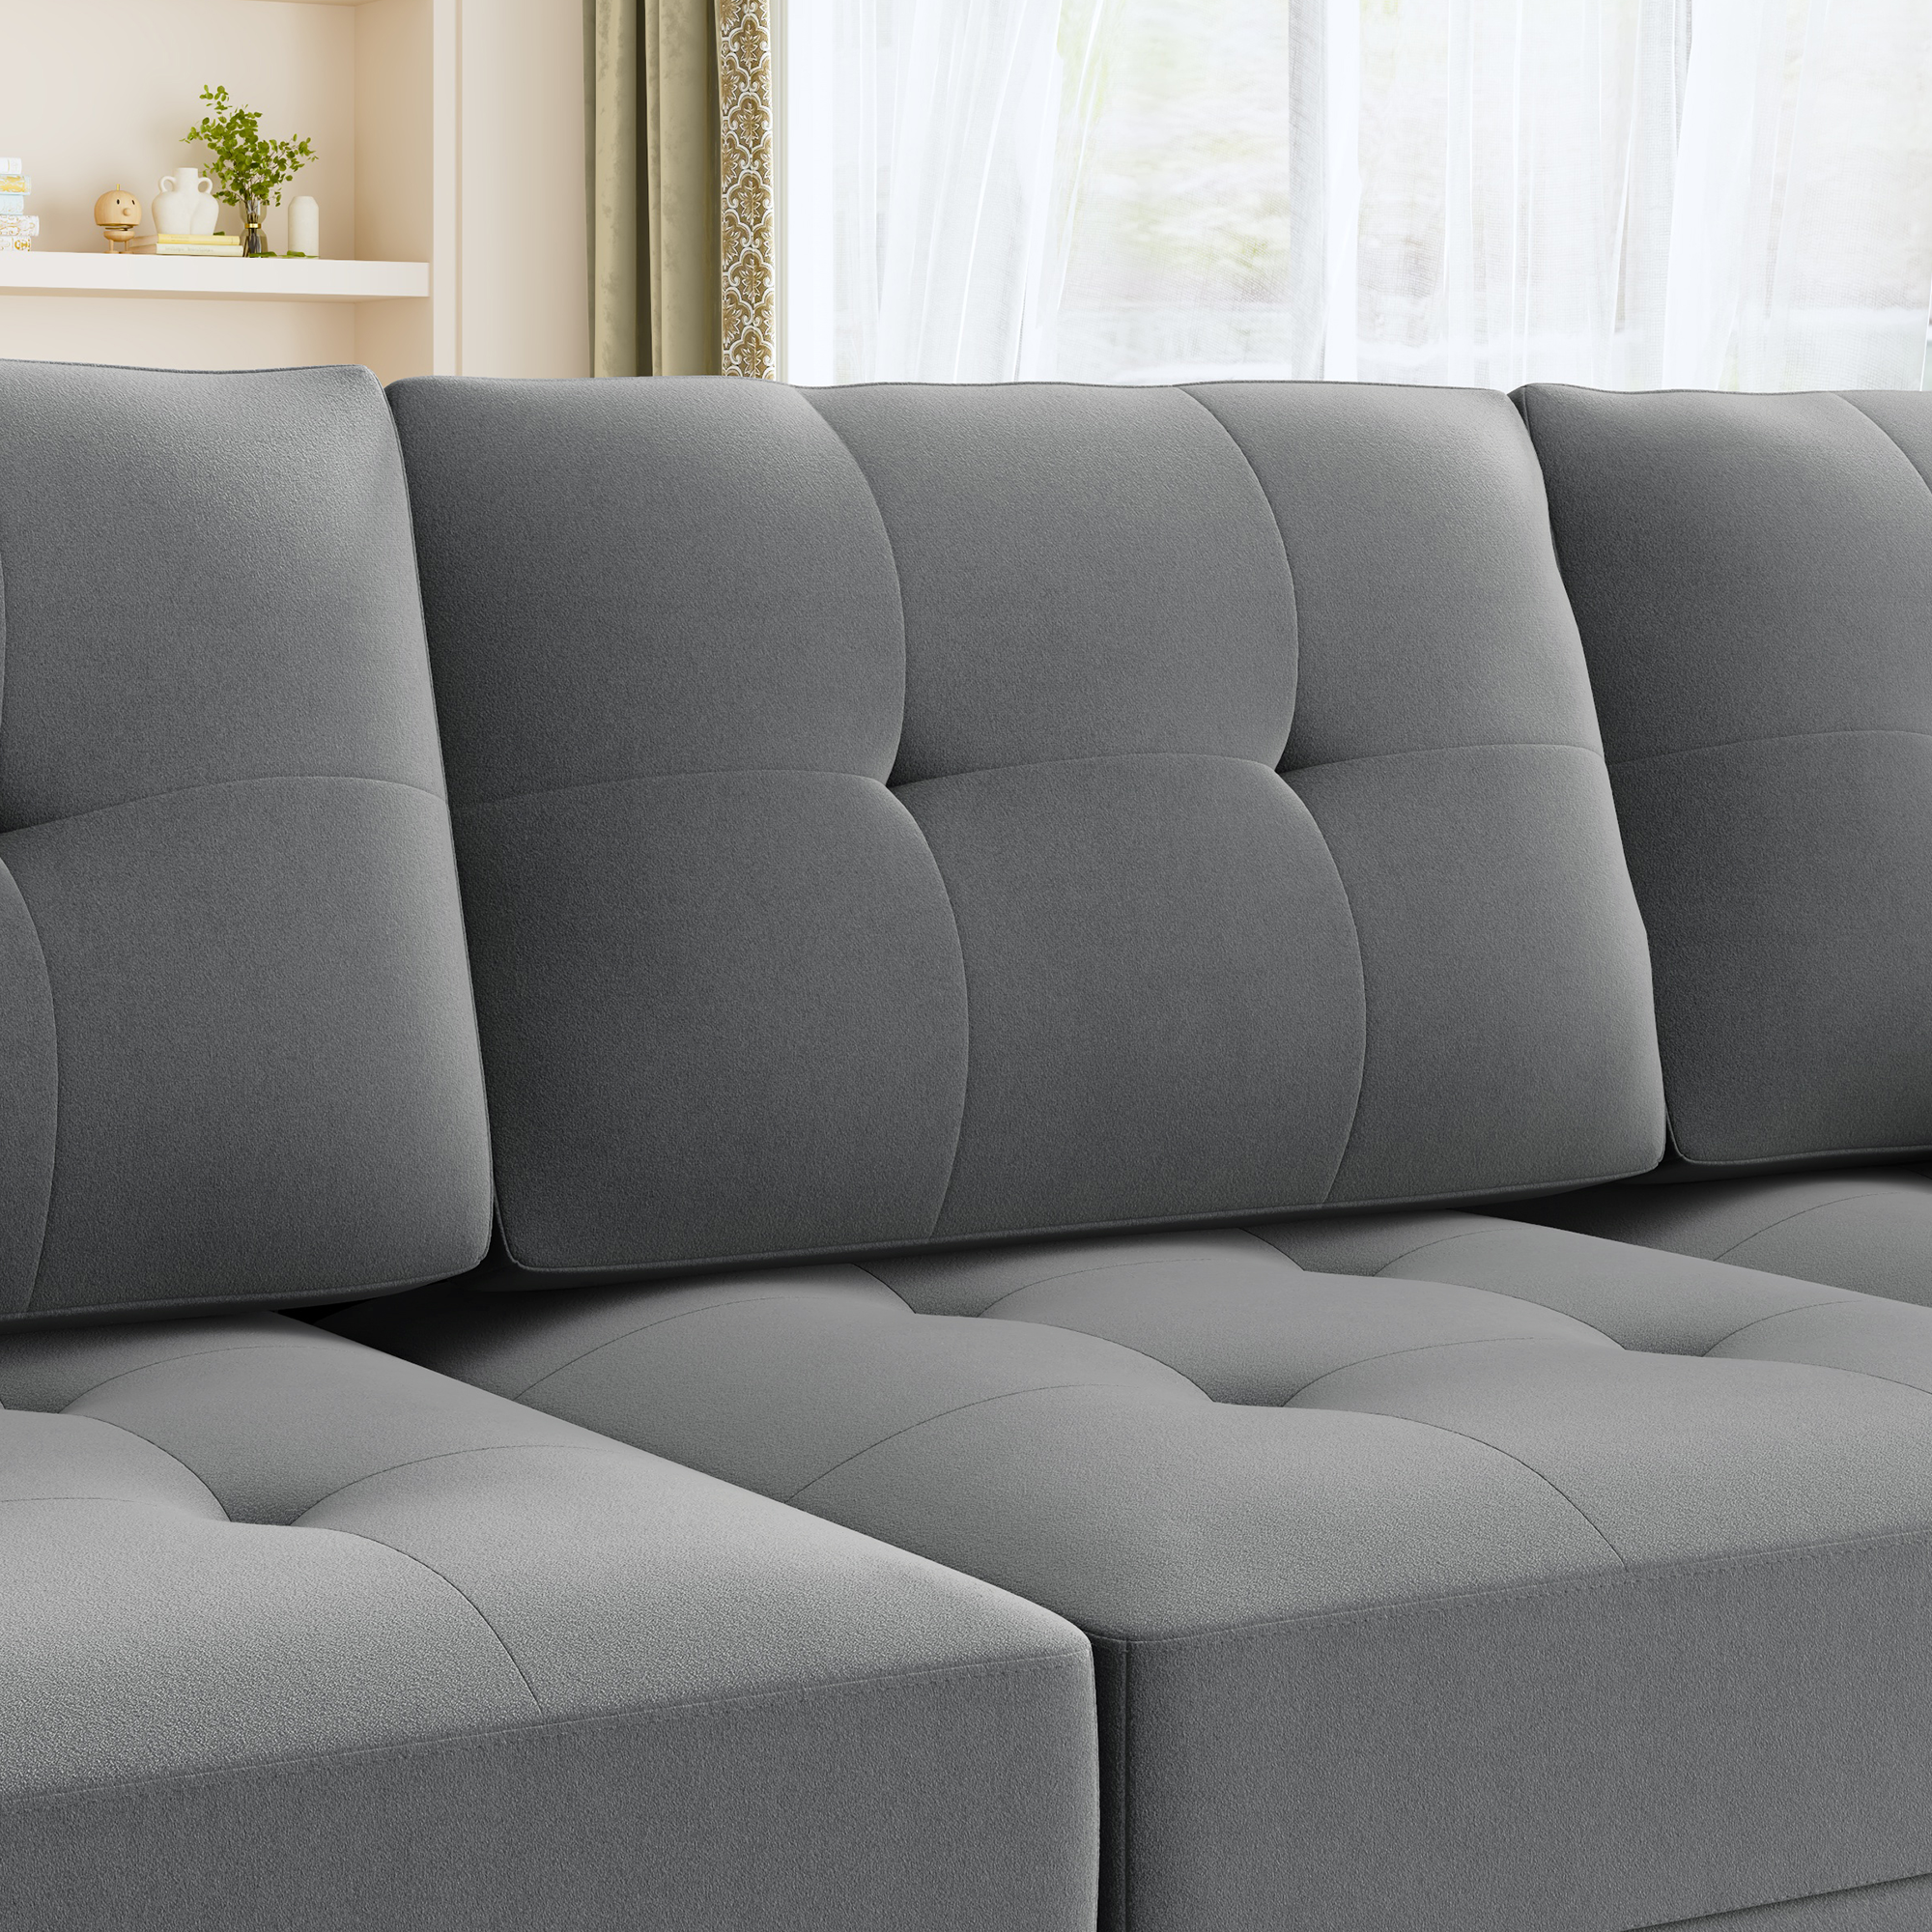 HONBAY Velvet Tufted 5-Seat U-Shaped Modular Storage Sofa with 2 Convertible Ottomans